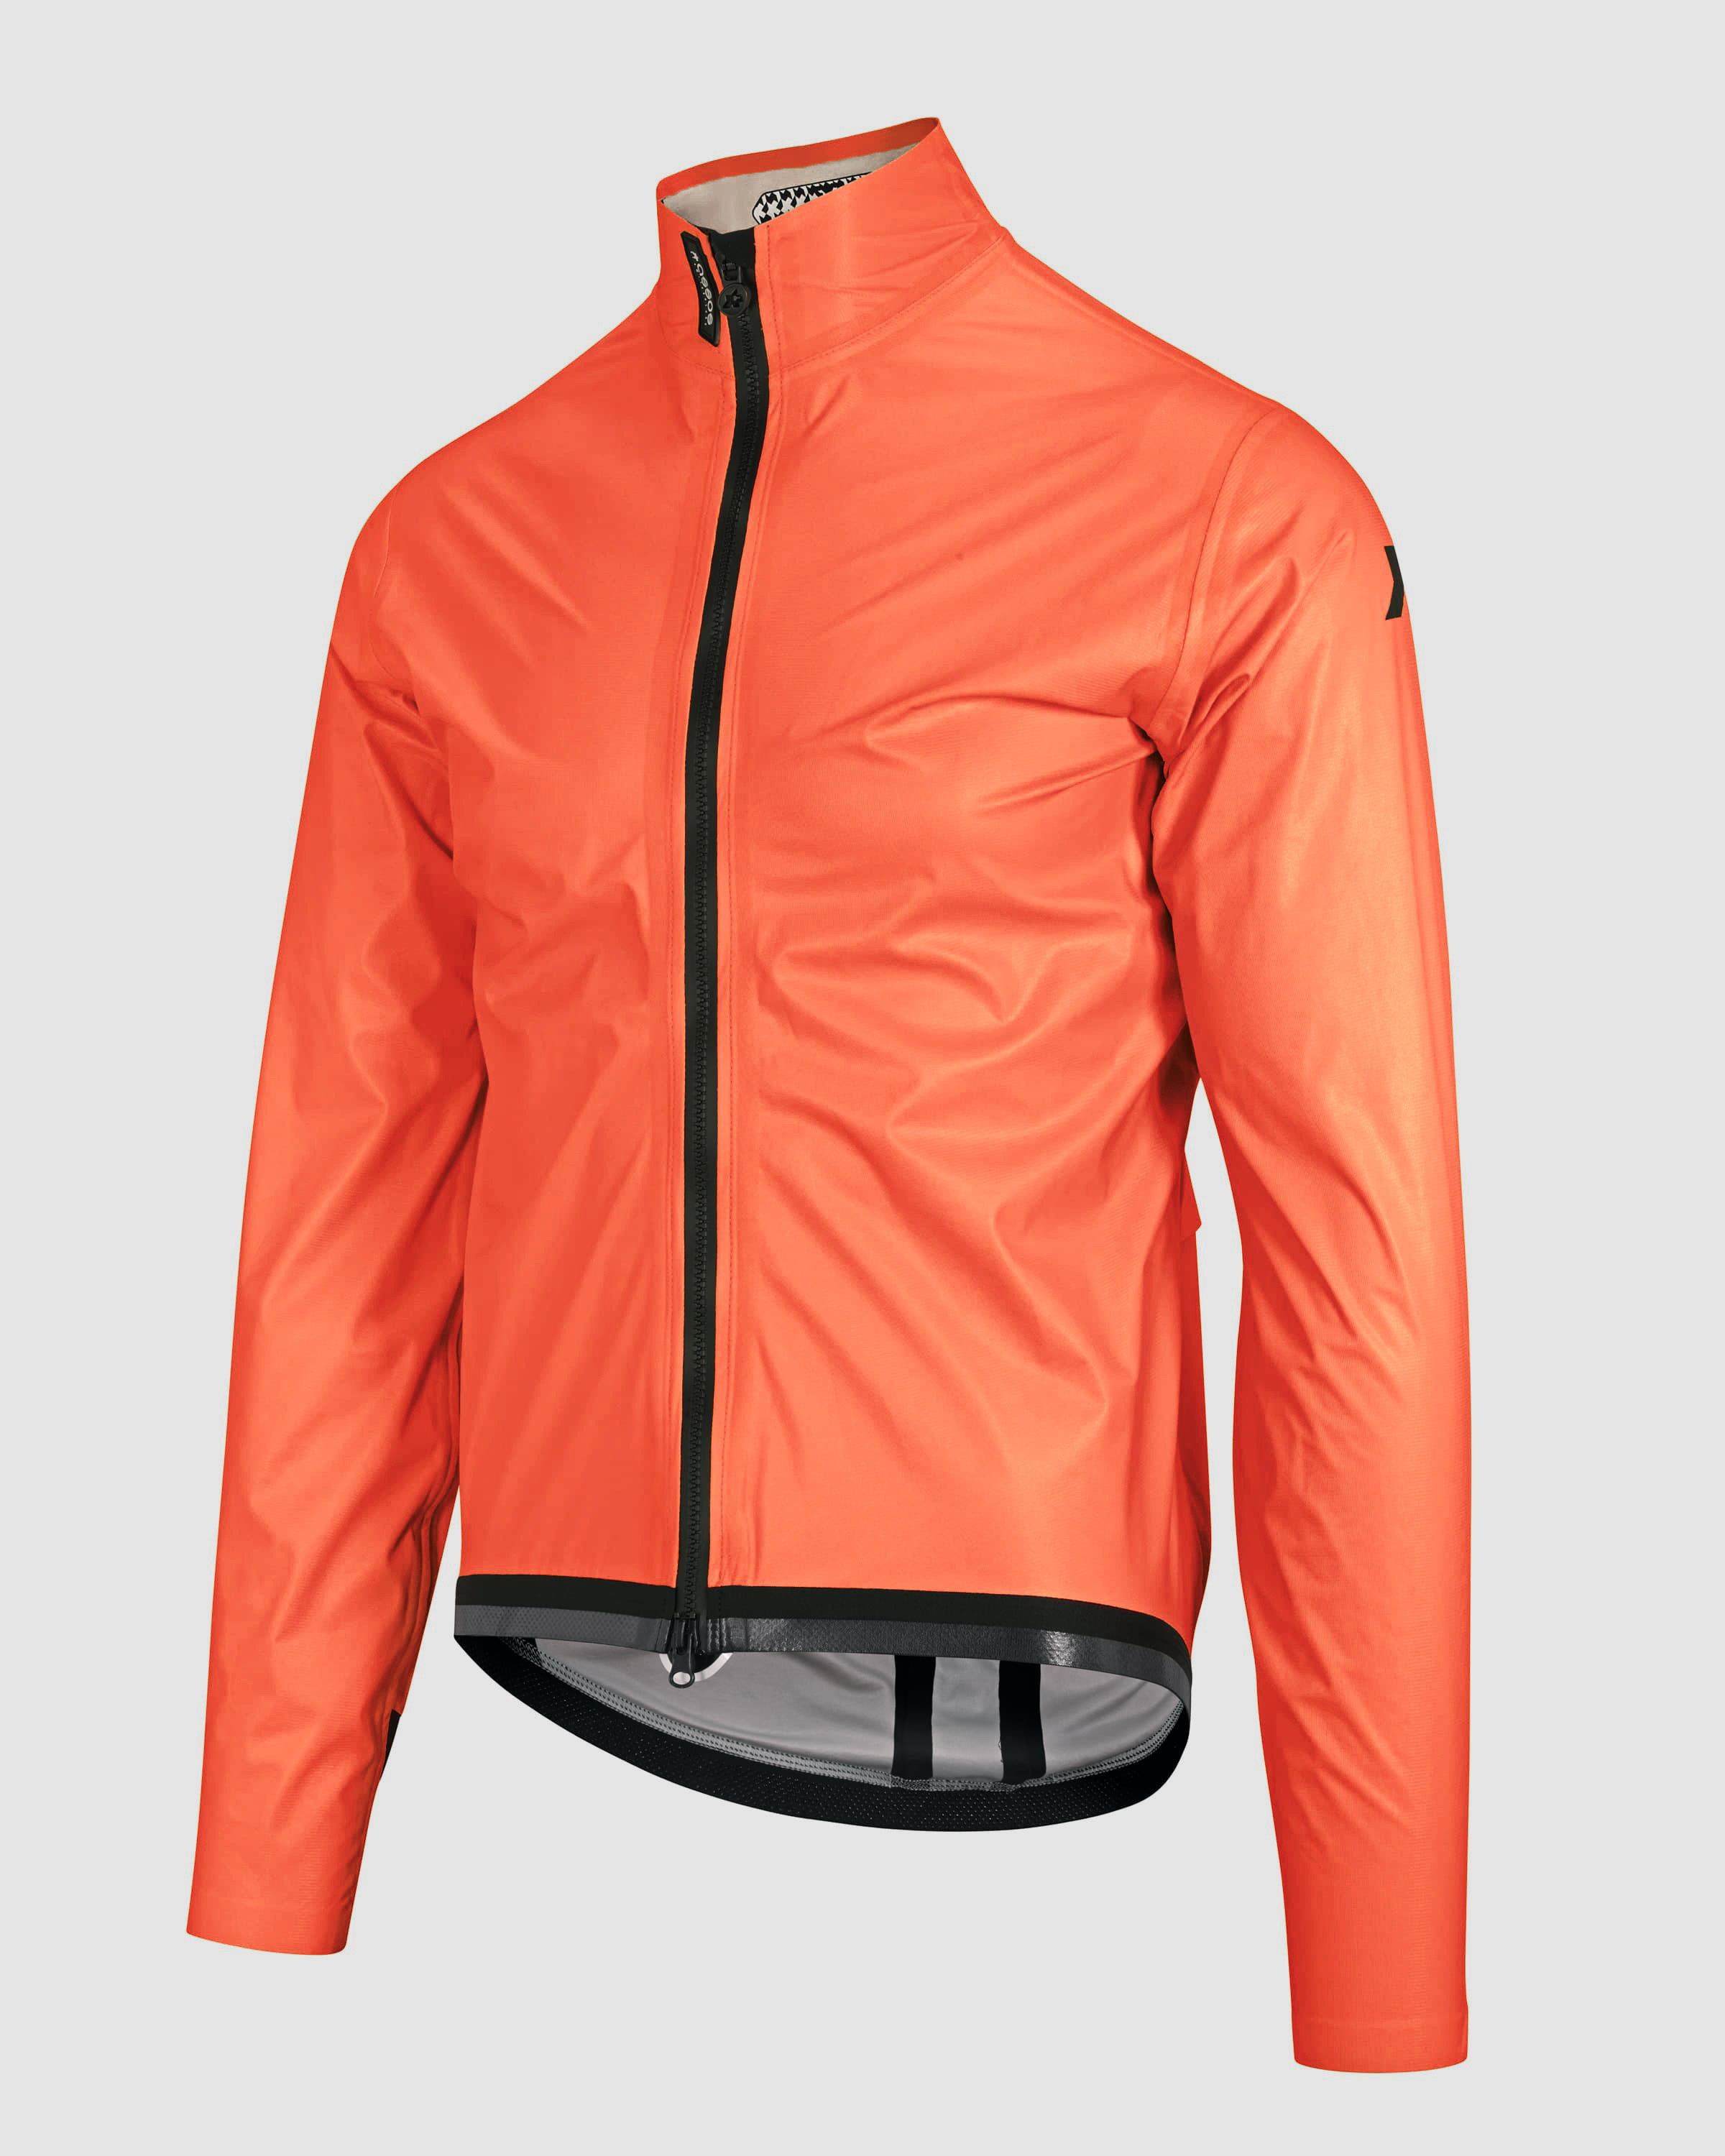 EQUIPE RS Schlosshund Rain Jacket EVO - ASSOS Of Switzerland - Official Outlet